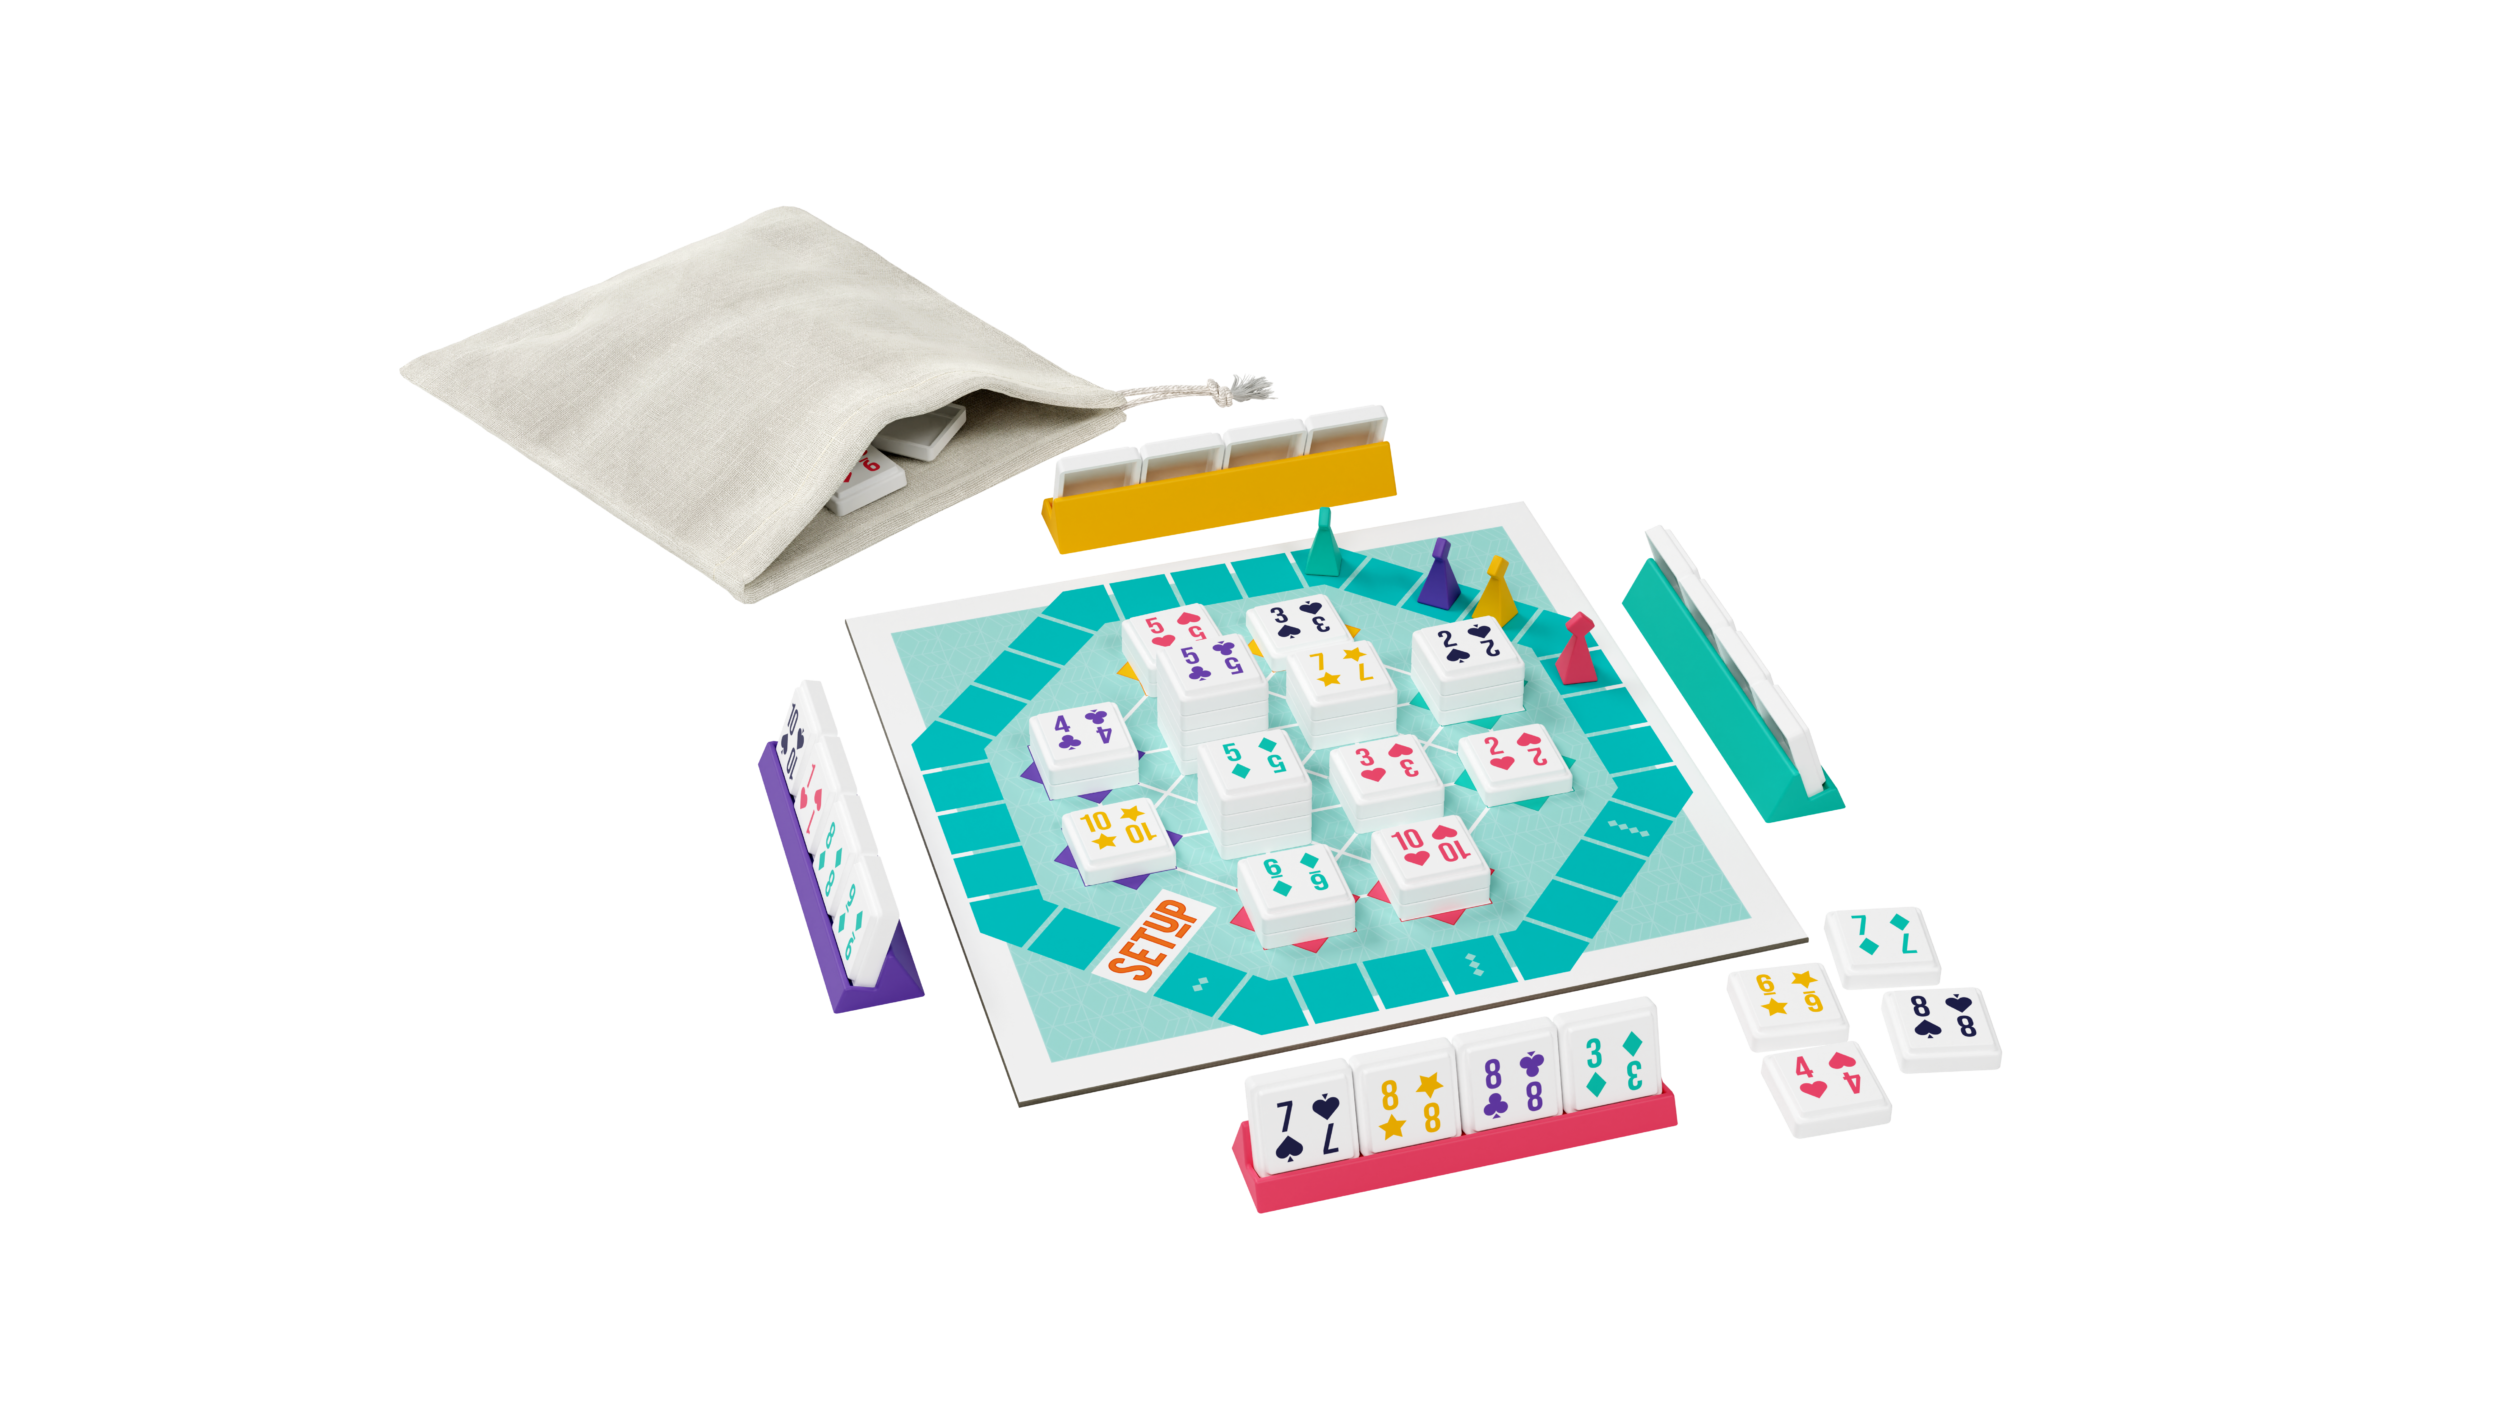 Asmodee Top Ten Board Game Multicolor